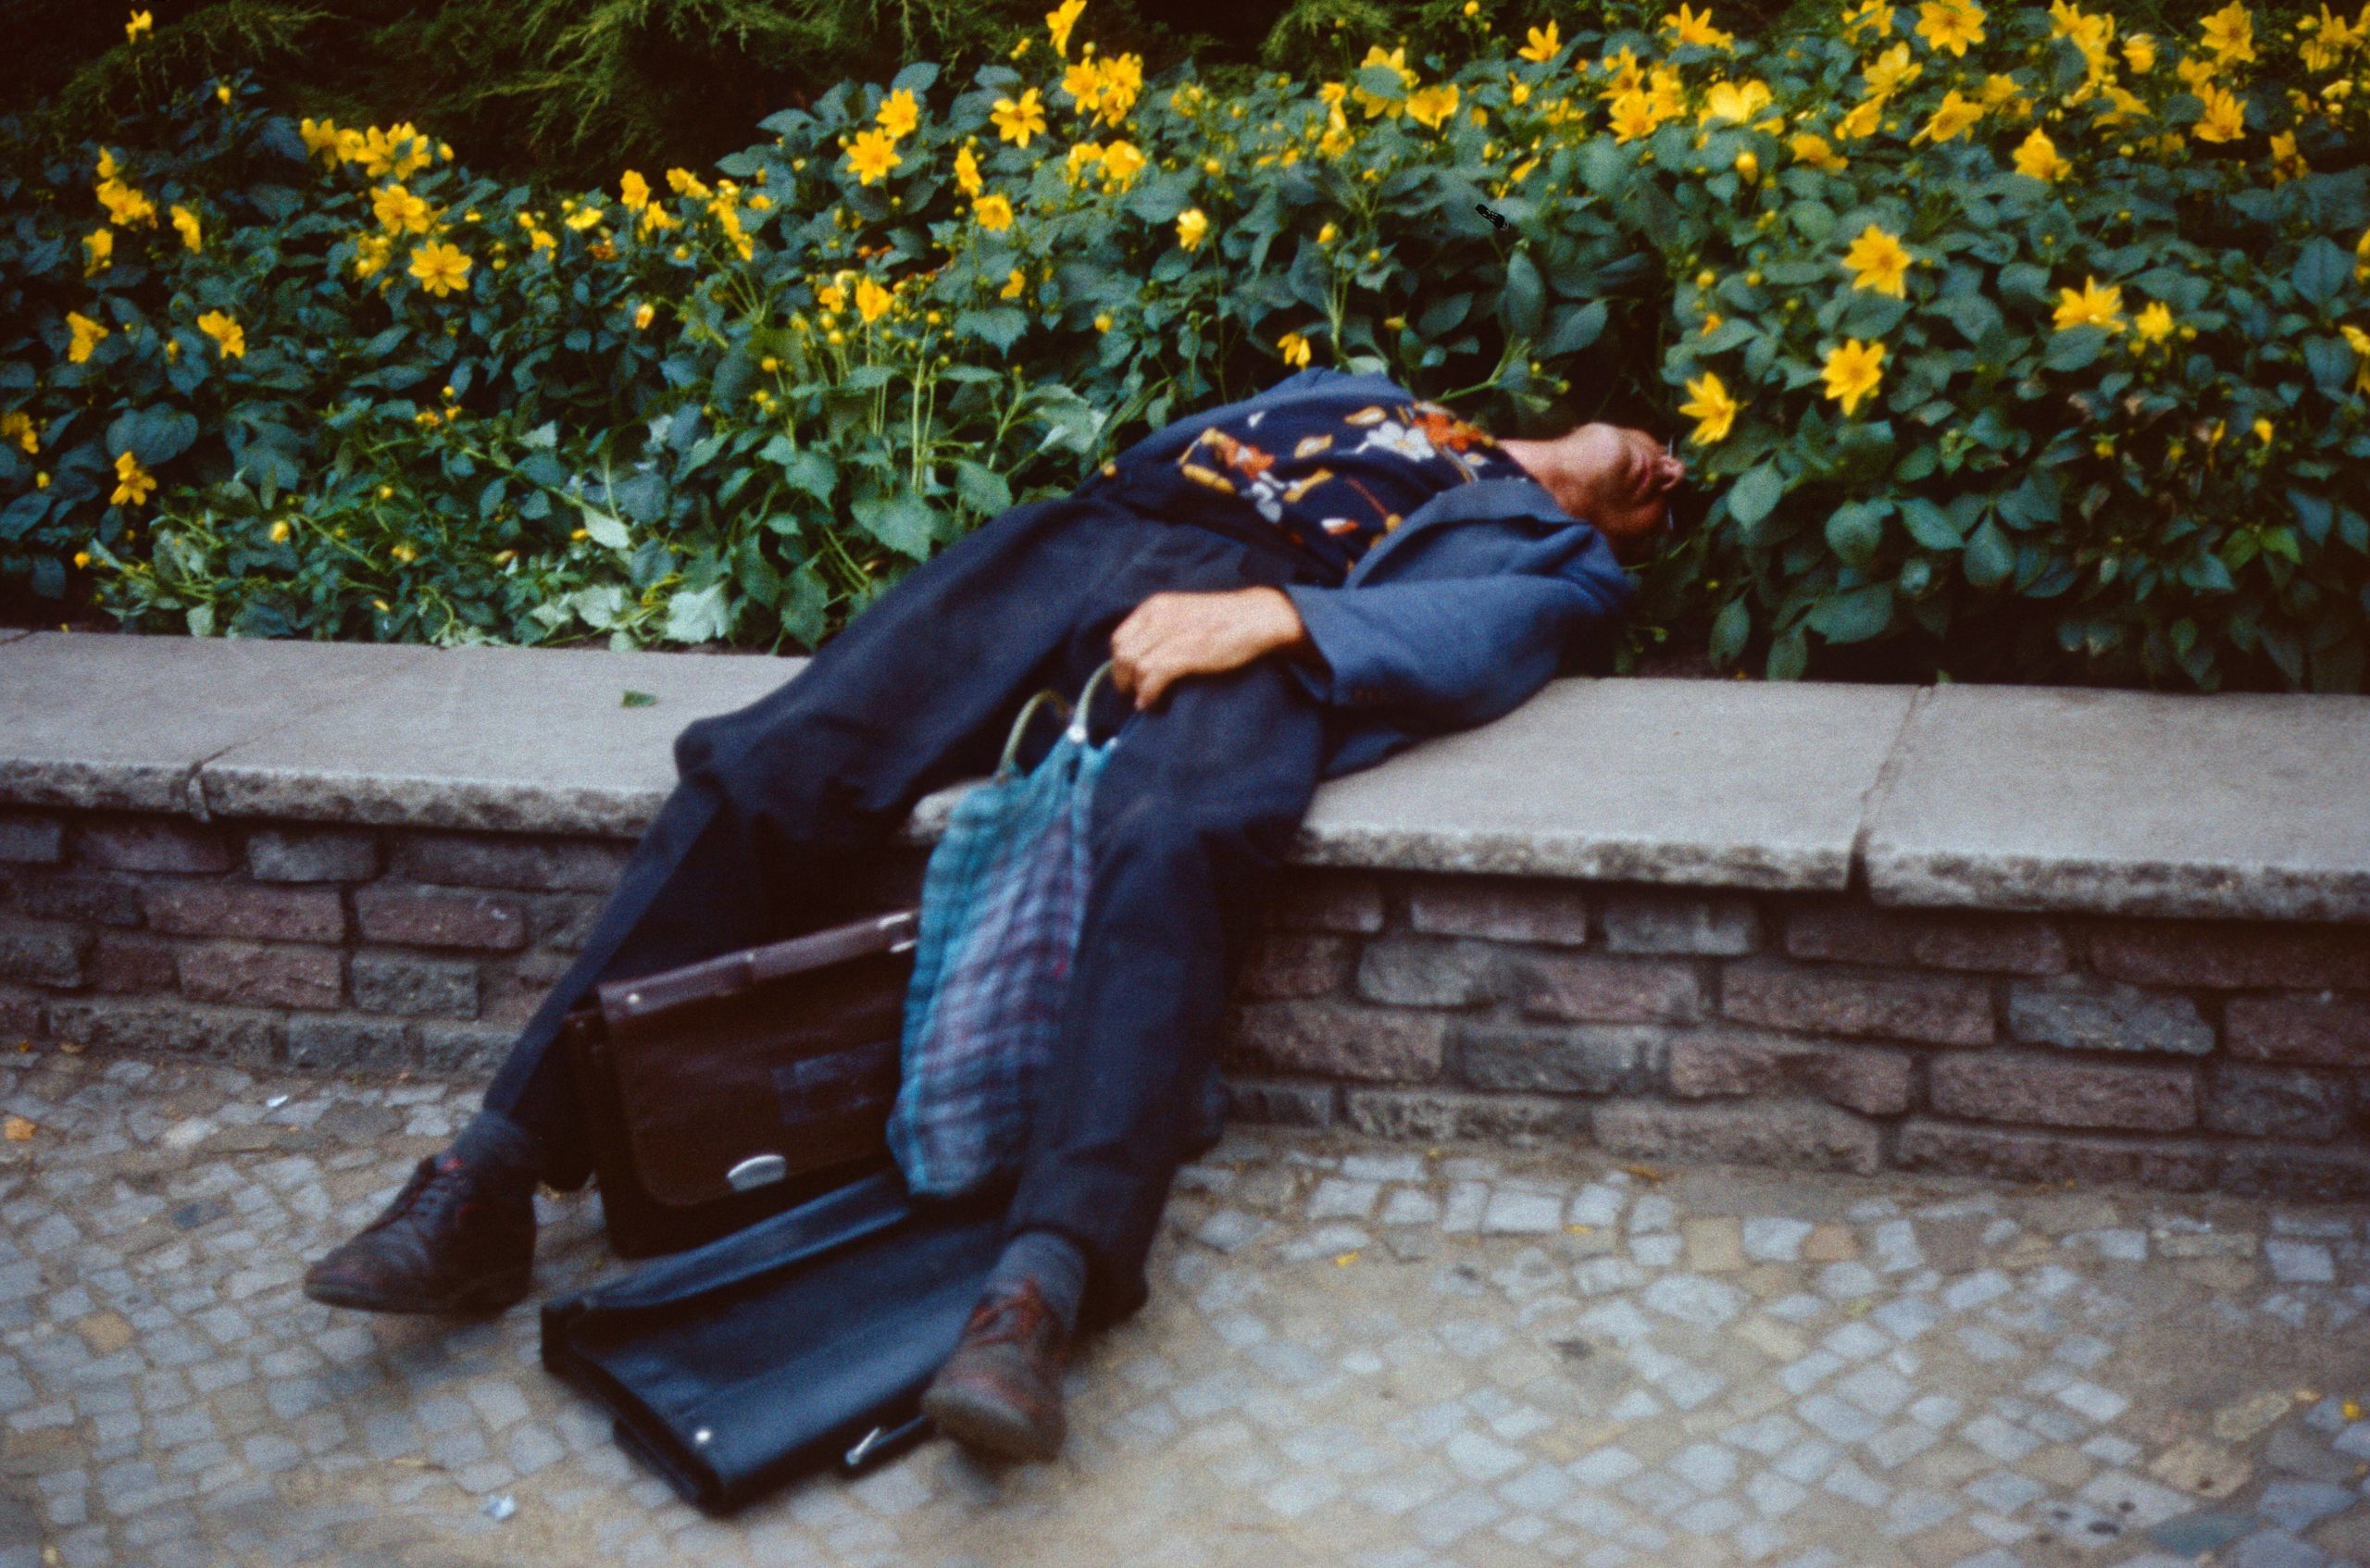 Mauer Berlin Fotos - Klassische Bildbeschreibung: Mann liegt betrunken an der Straße im Blumenbeet. Foto: Imago/Frank Sorge